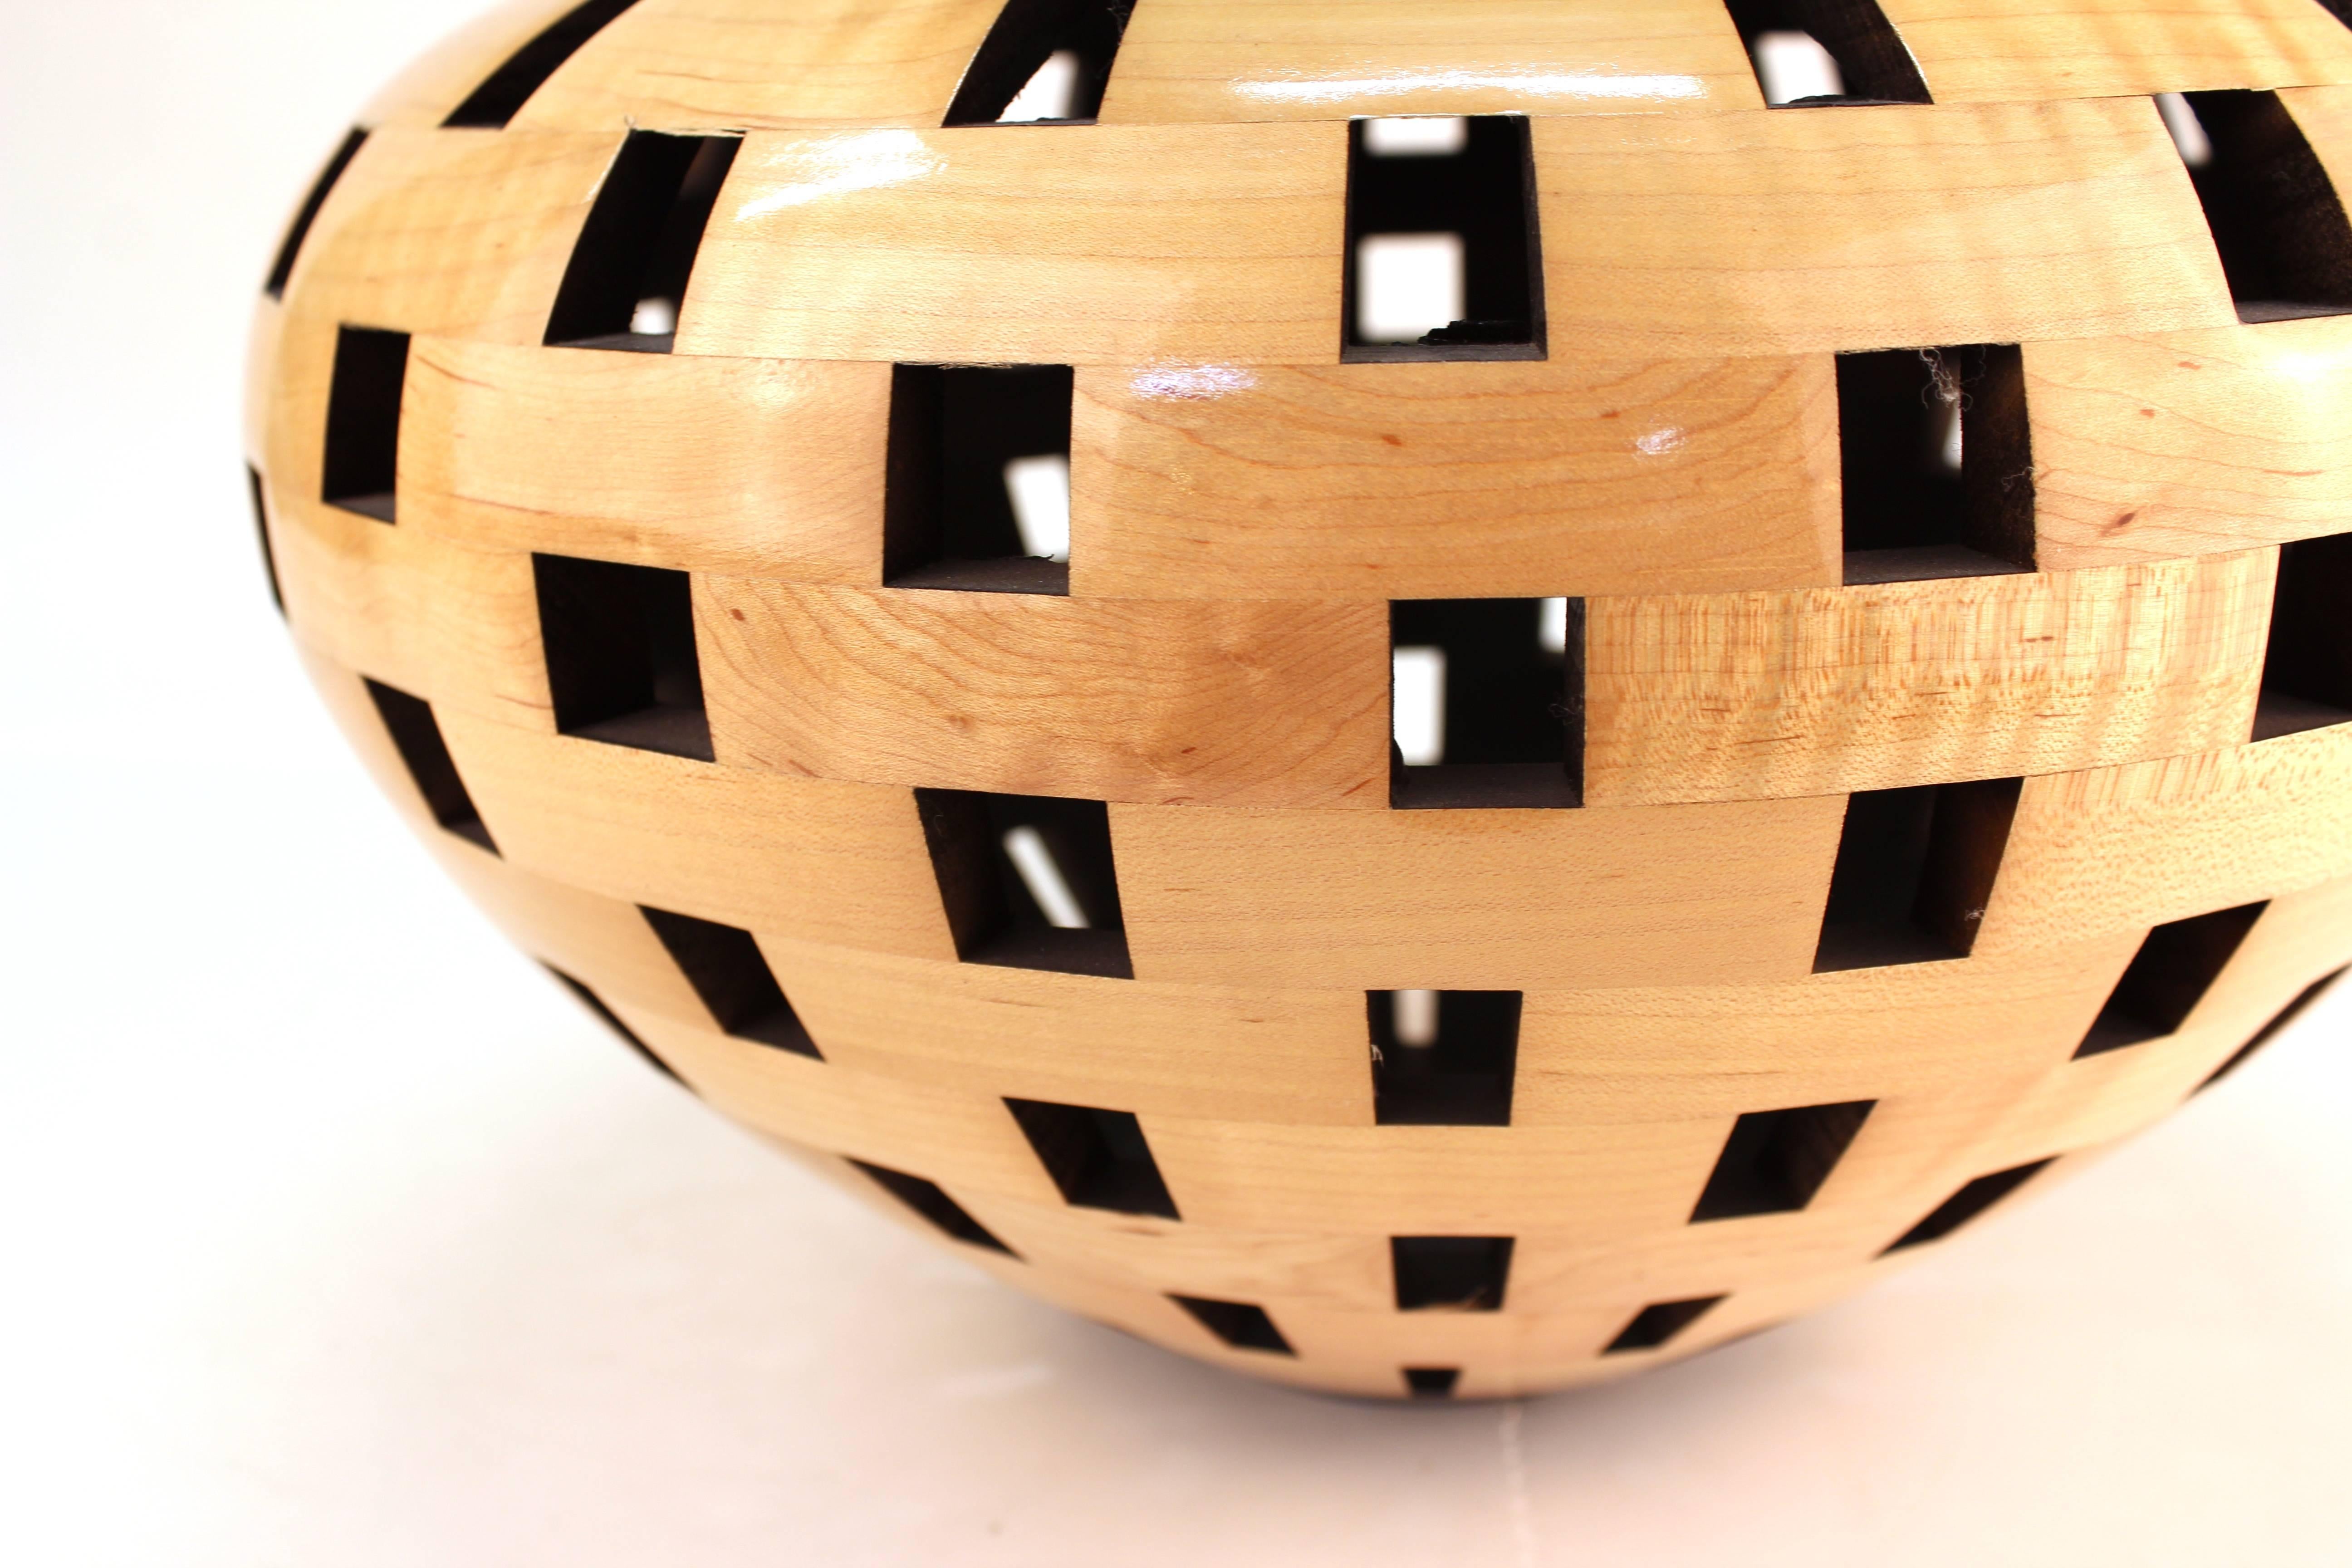 segmented wooden vases